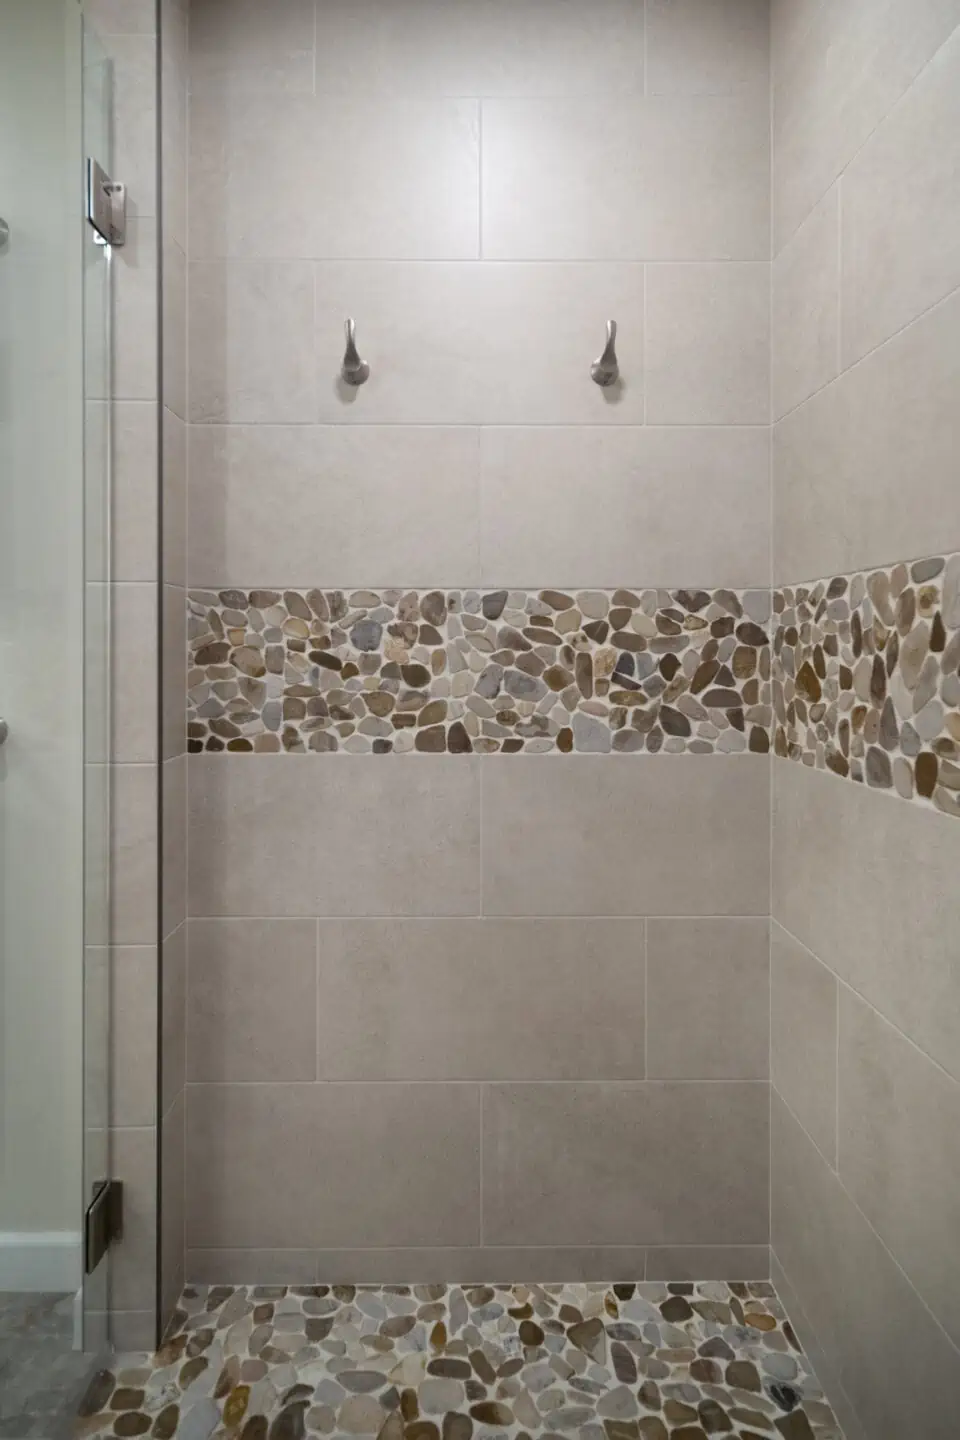 Tile shower with towel hooks